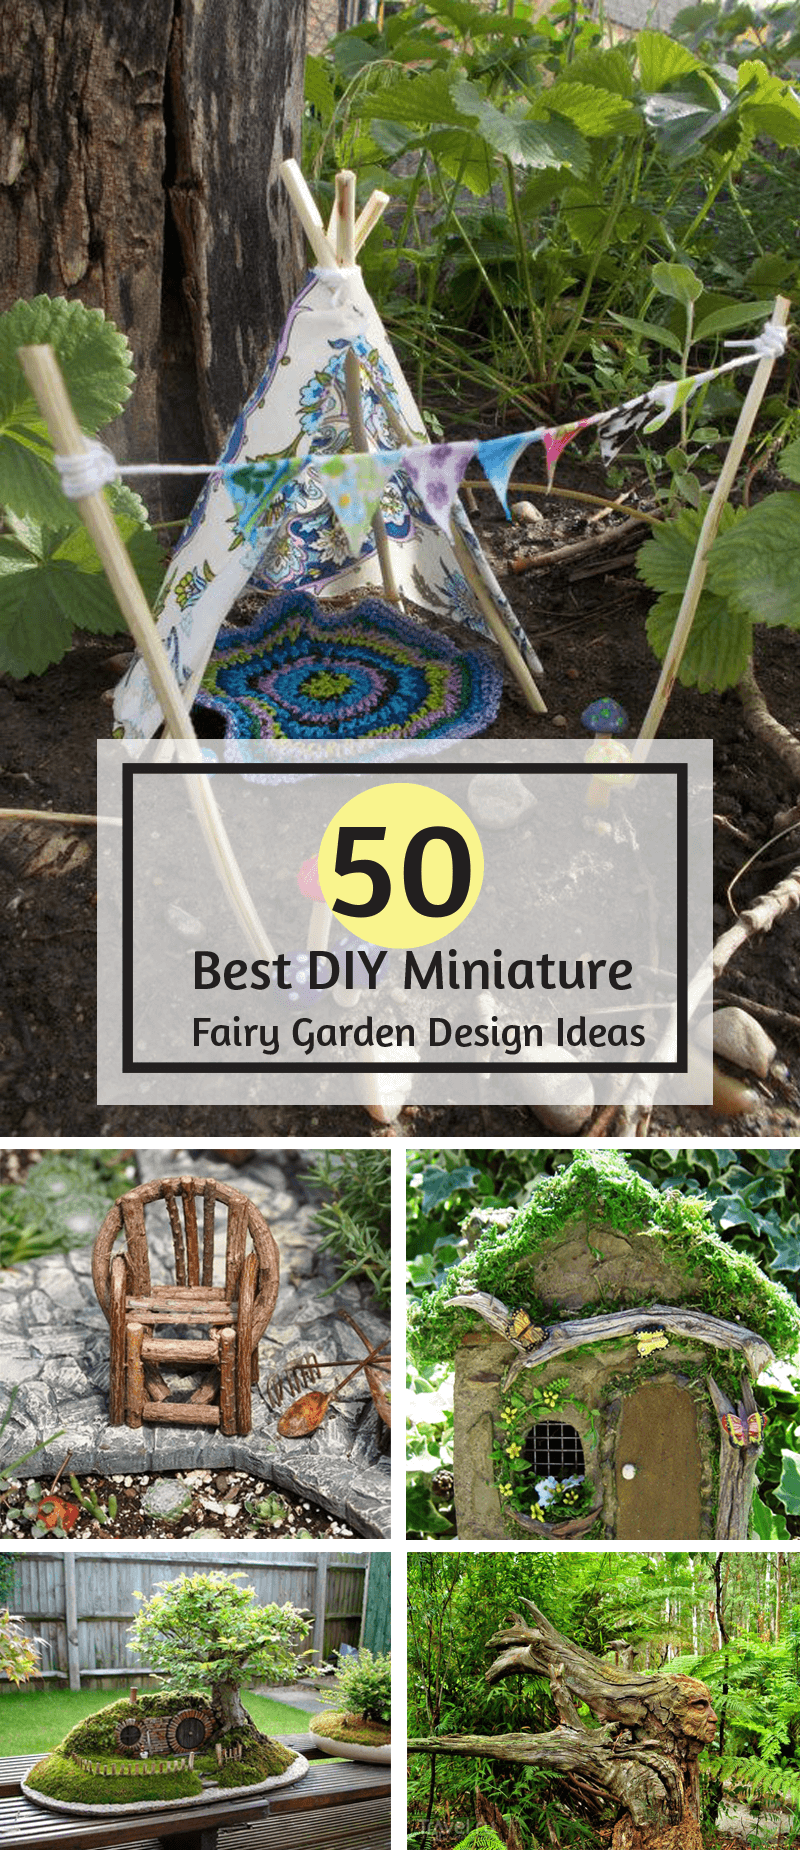 DIY Miniature Fairy Garden Design Ideas